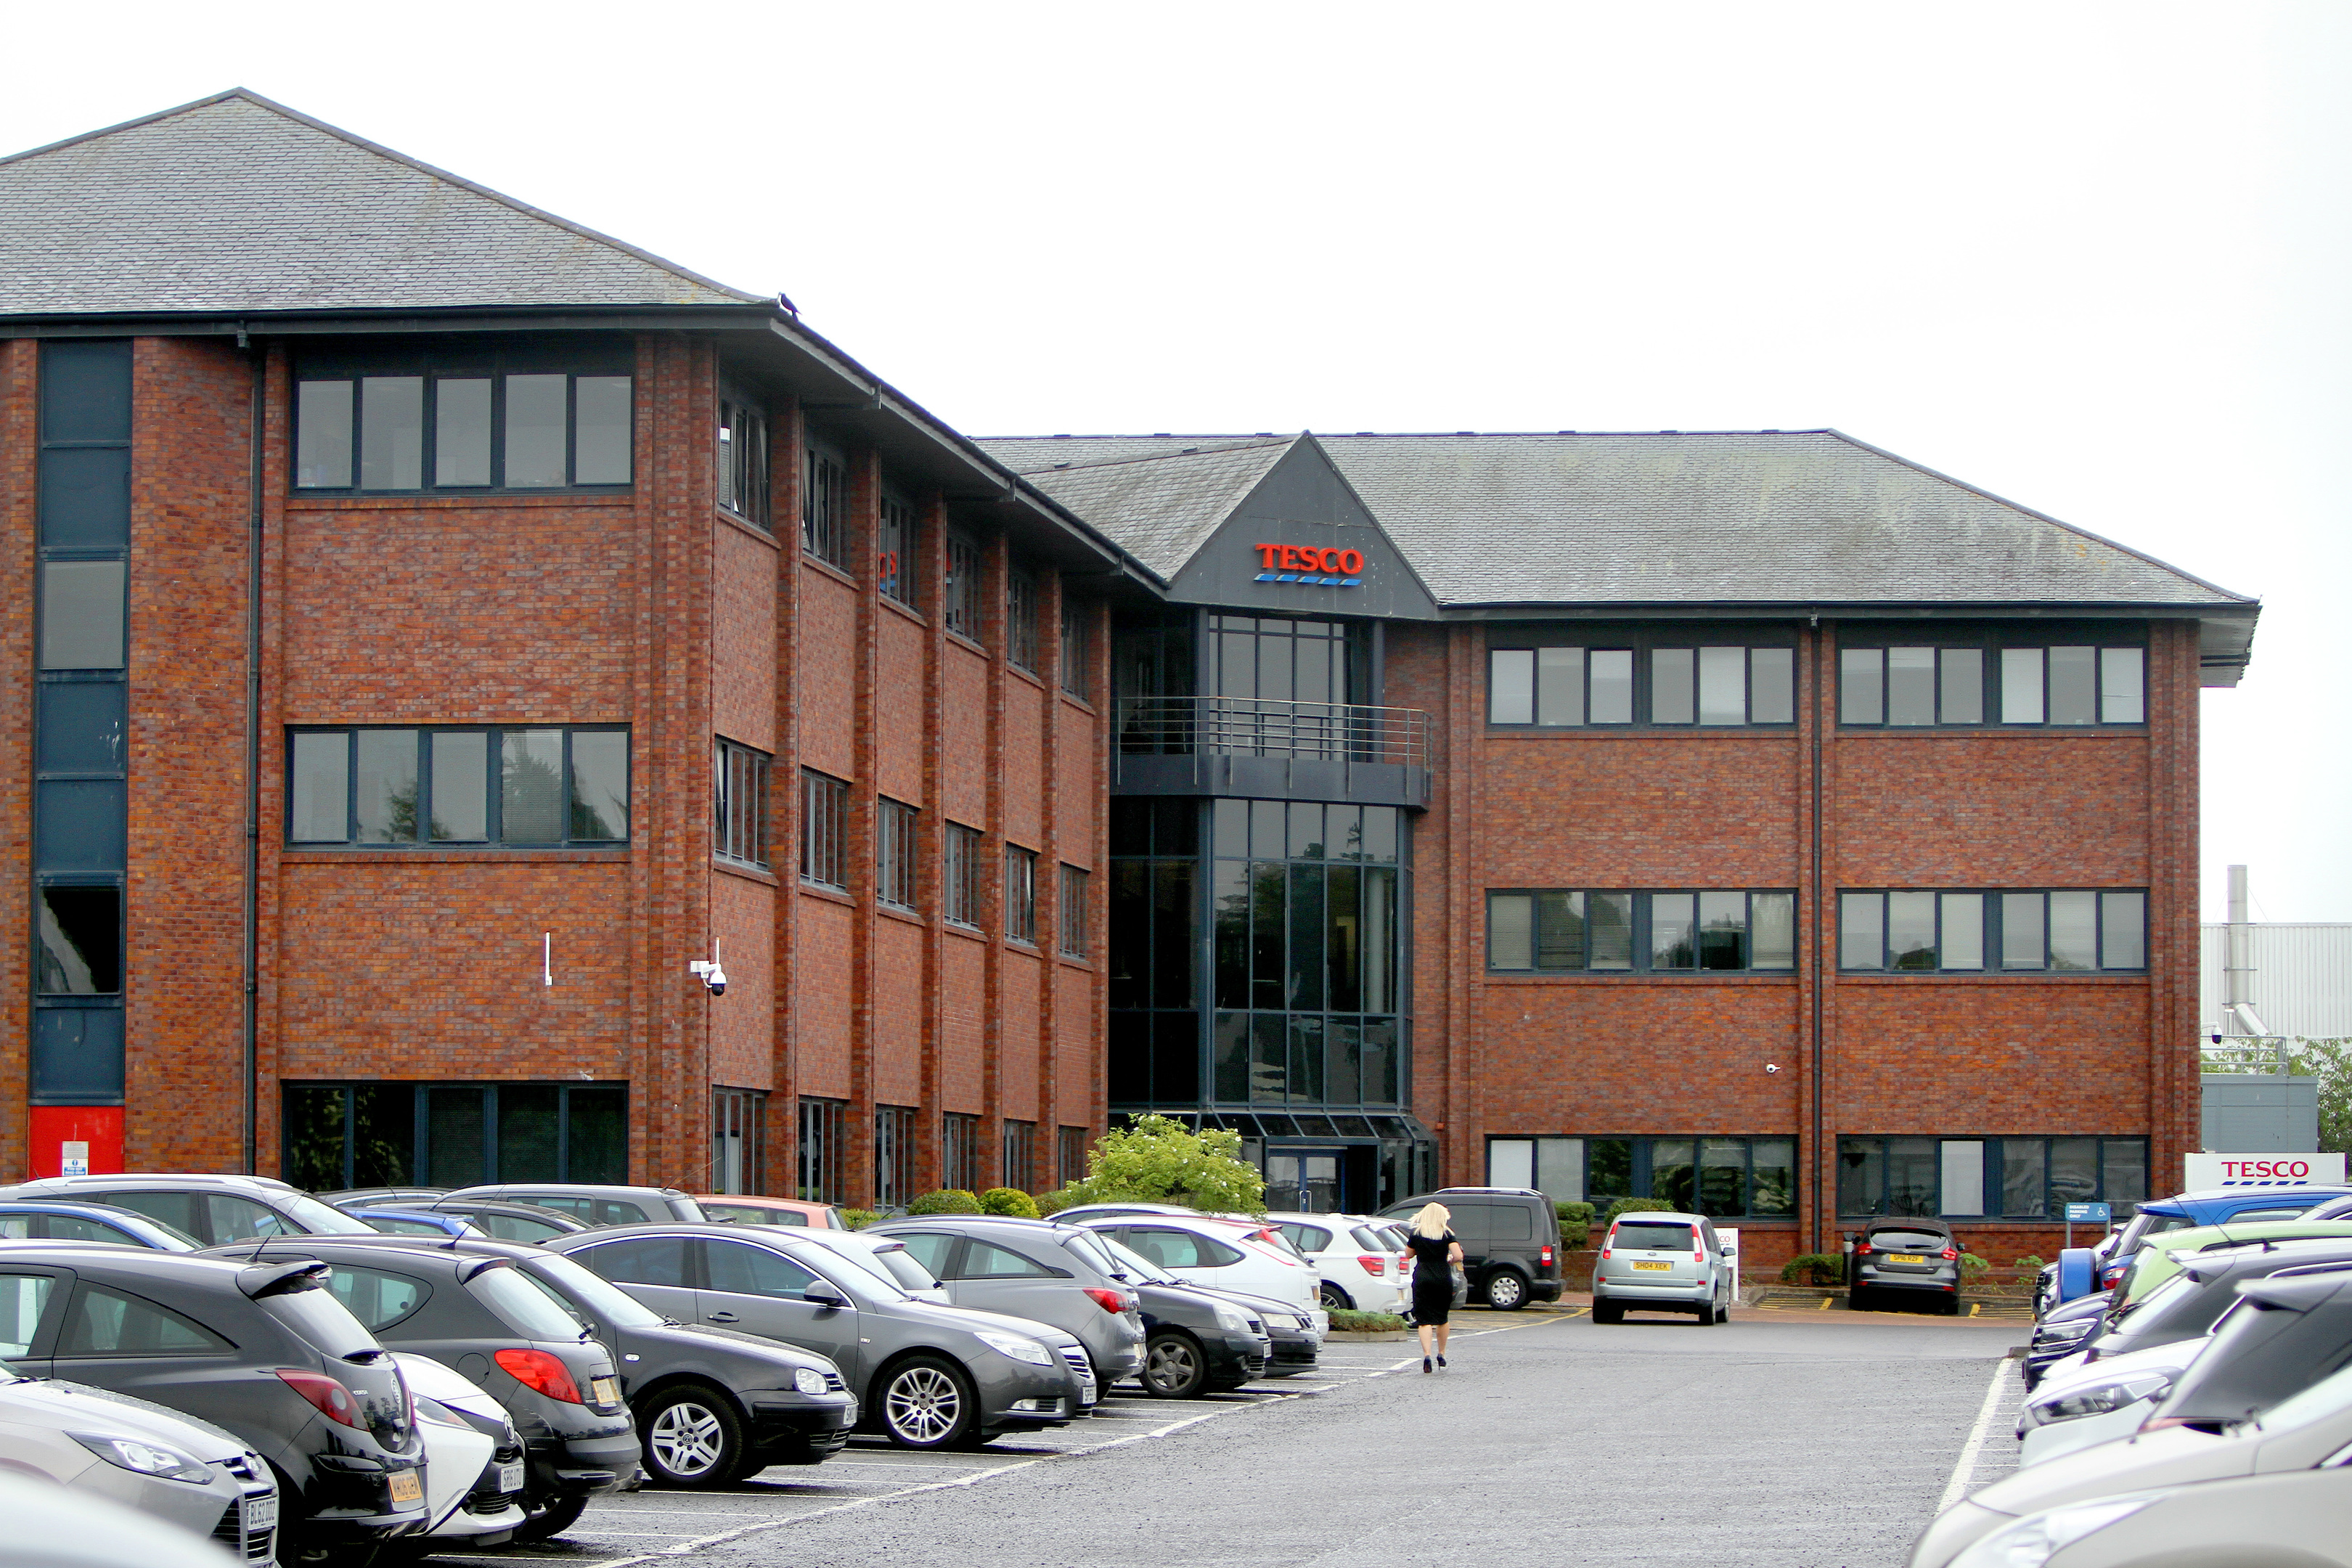 The Tesco Customer Service Centre on Baird Avenue, Dundee.